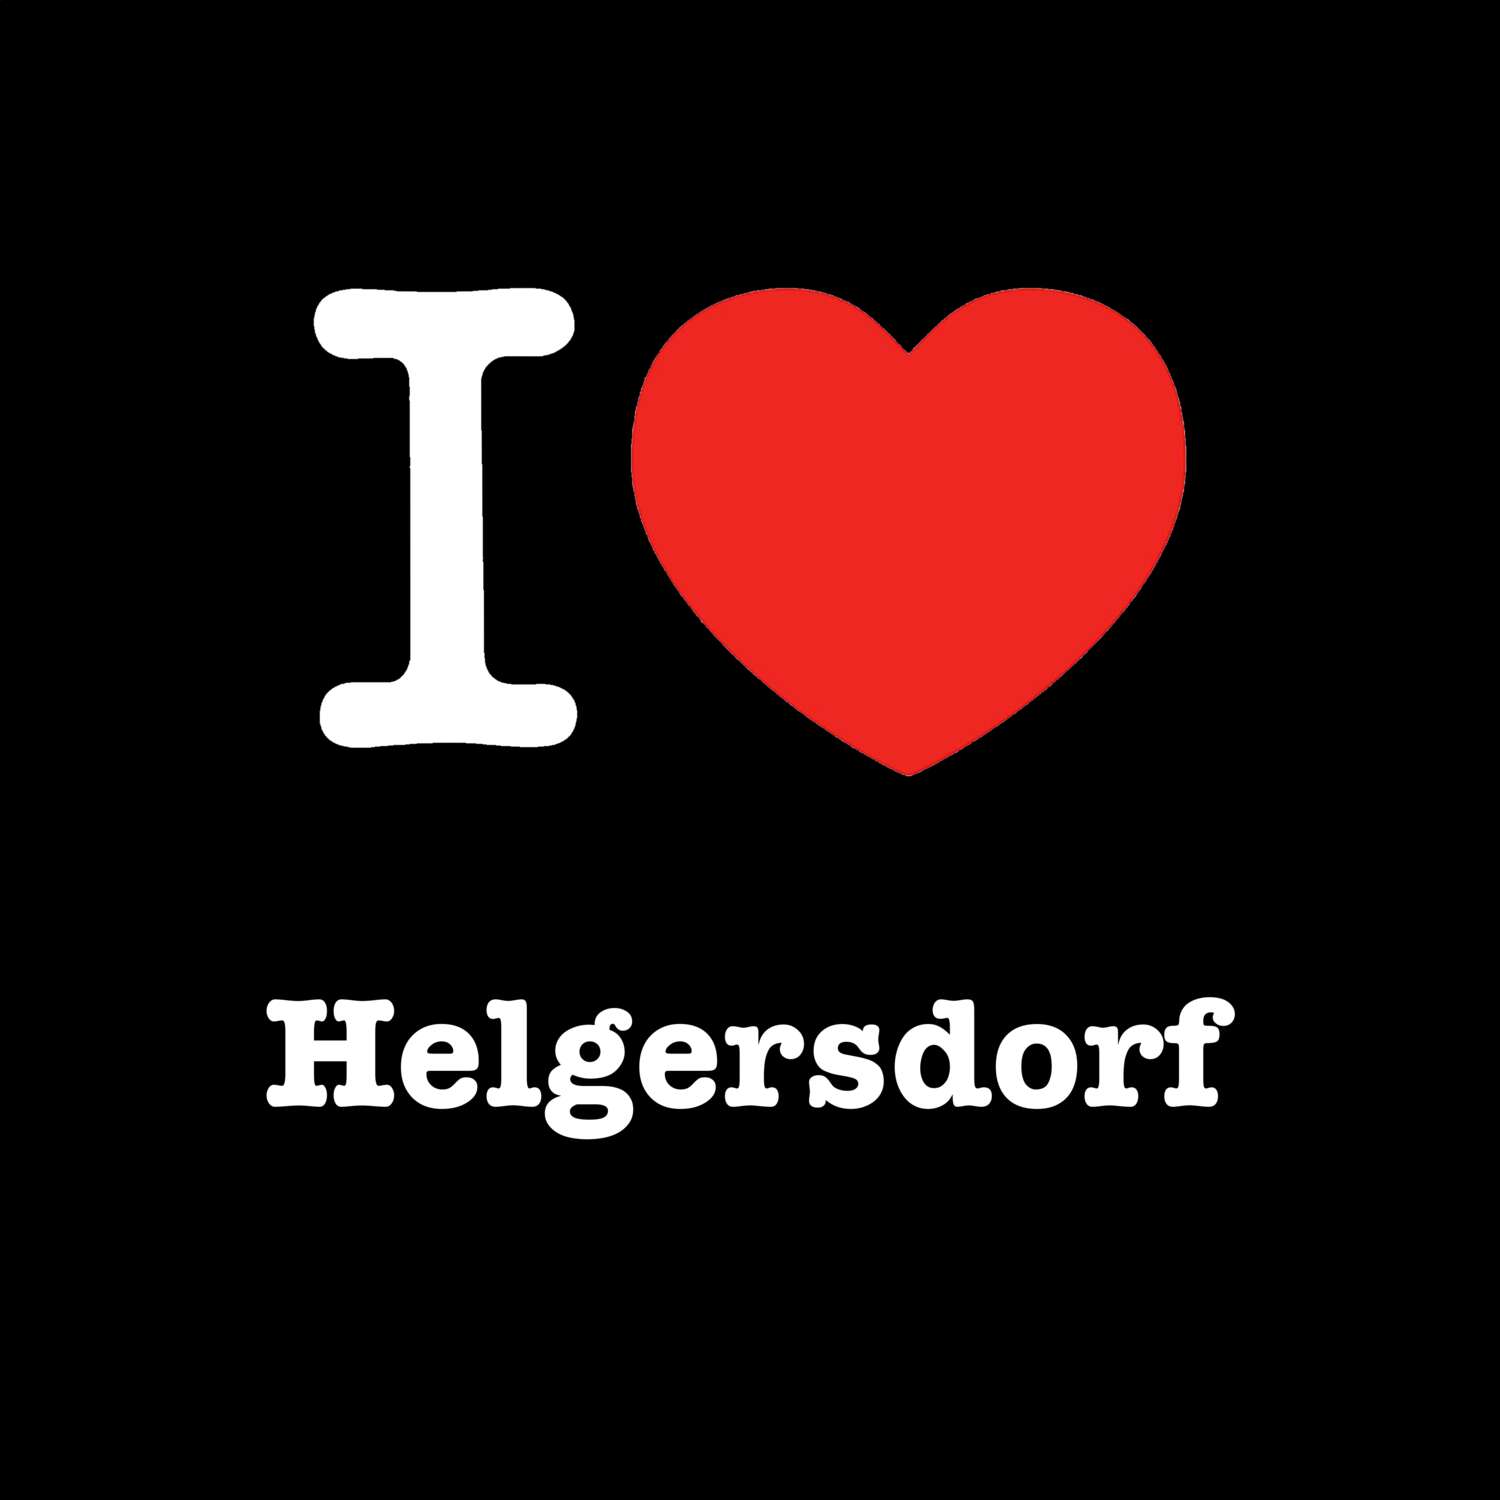 Helgersdorf T-Shirt »I love«